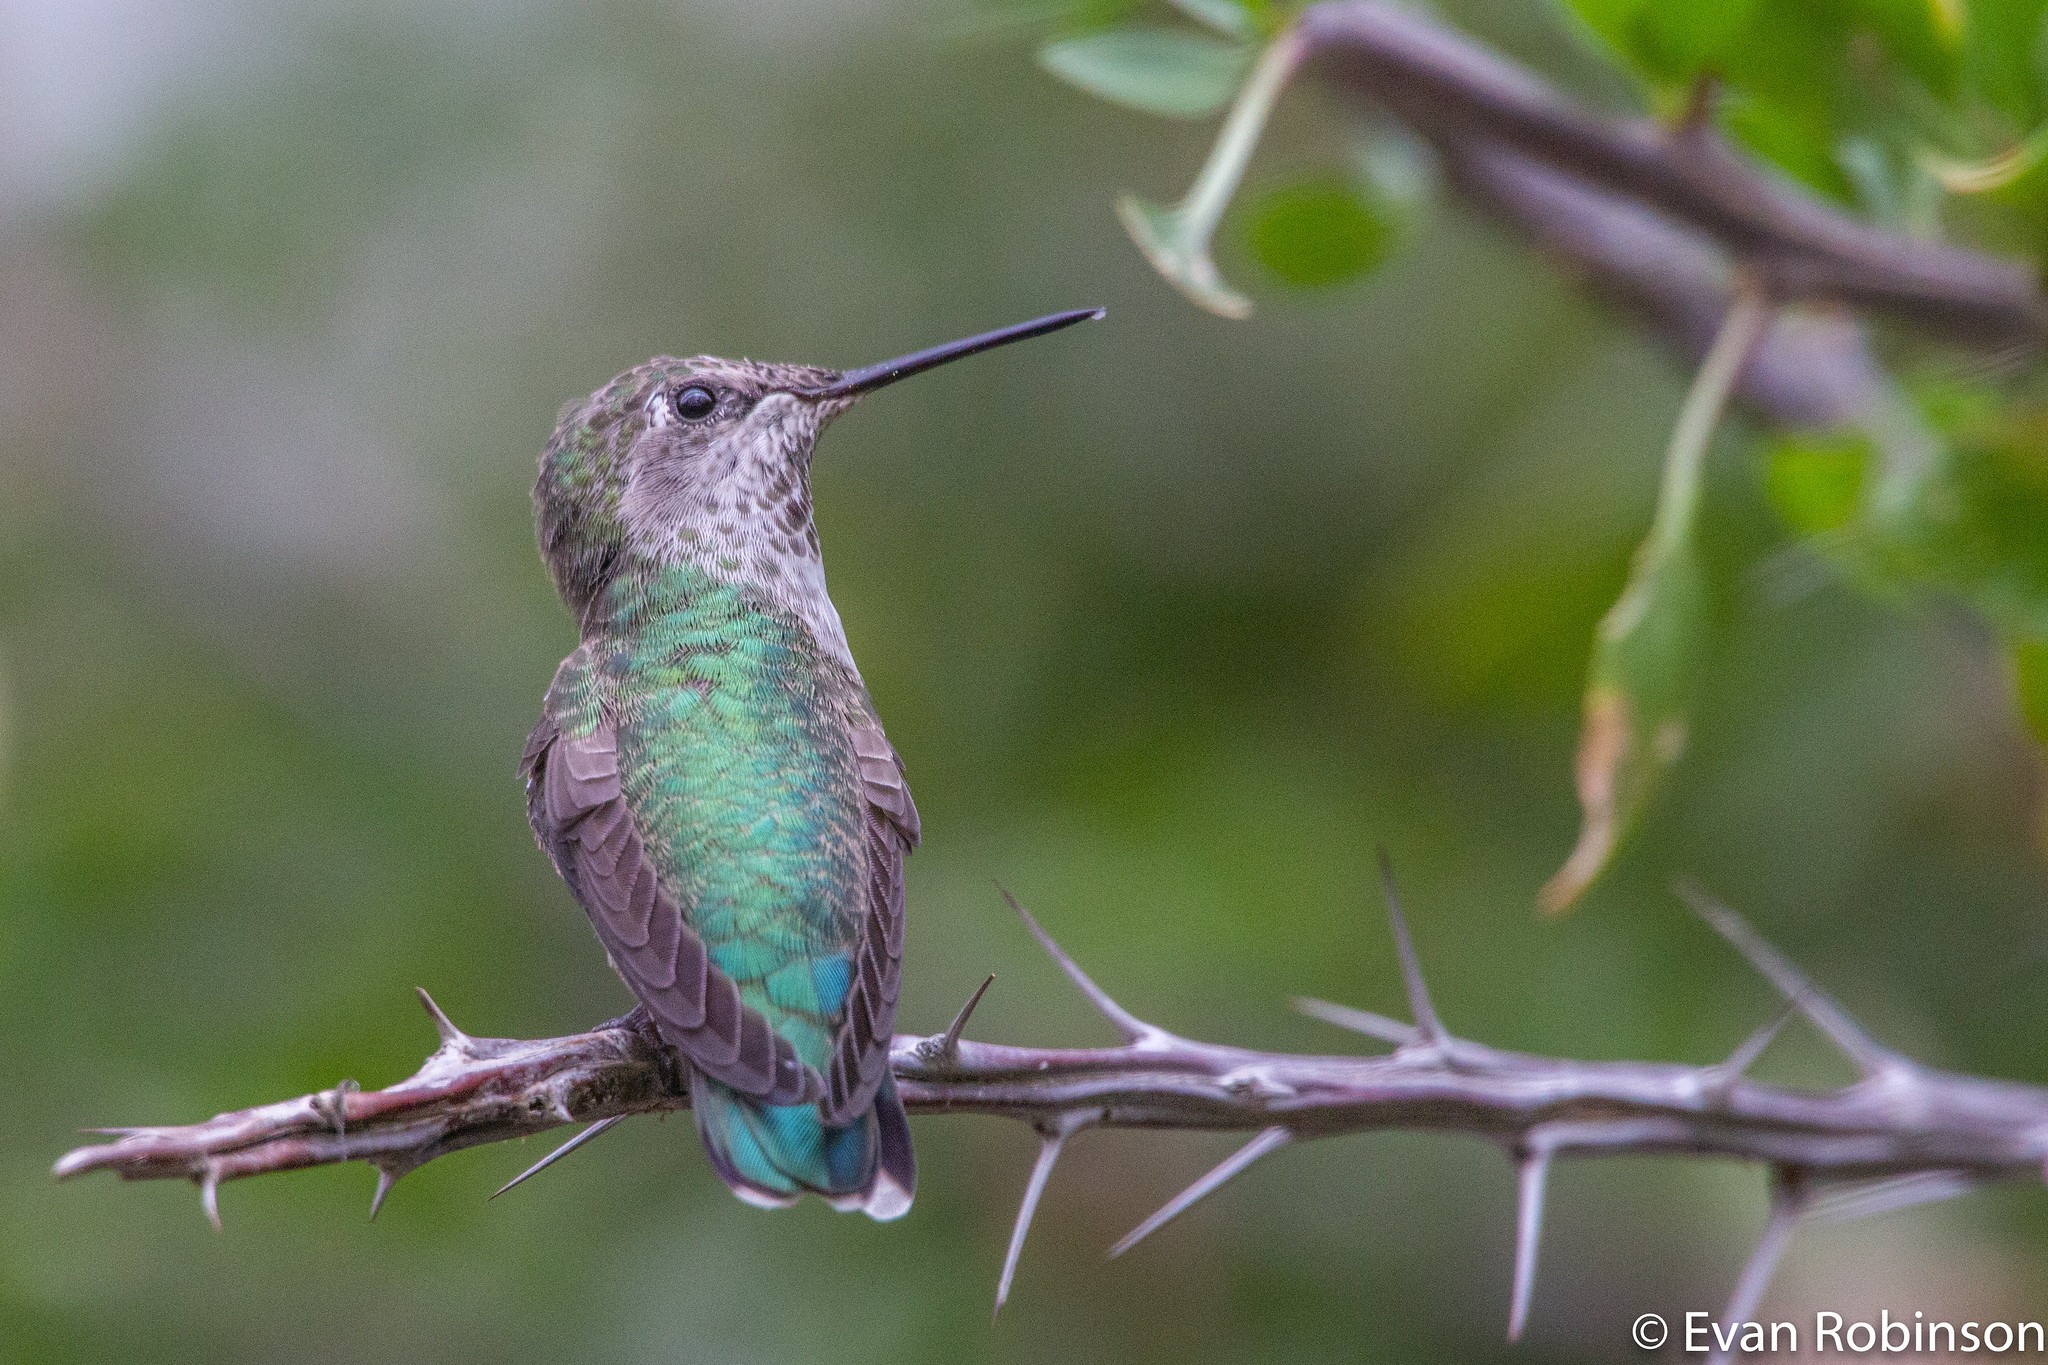 Hummingbird at rest with drop on beak